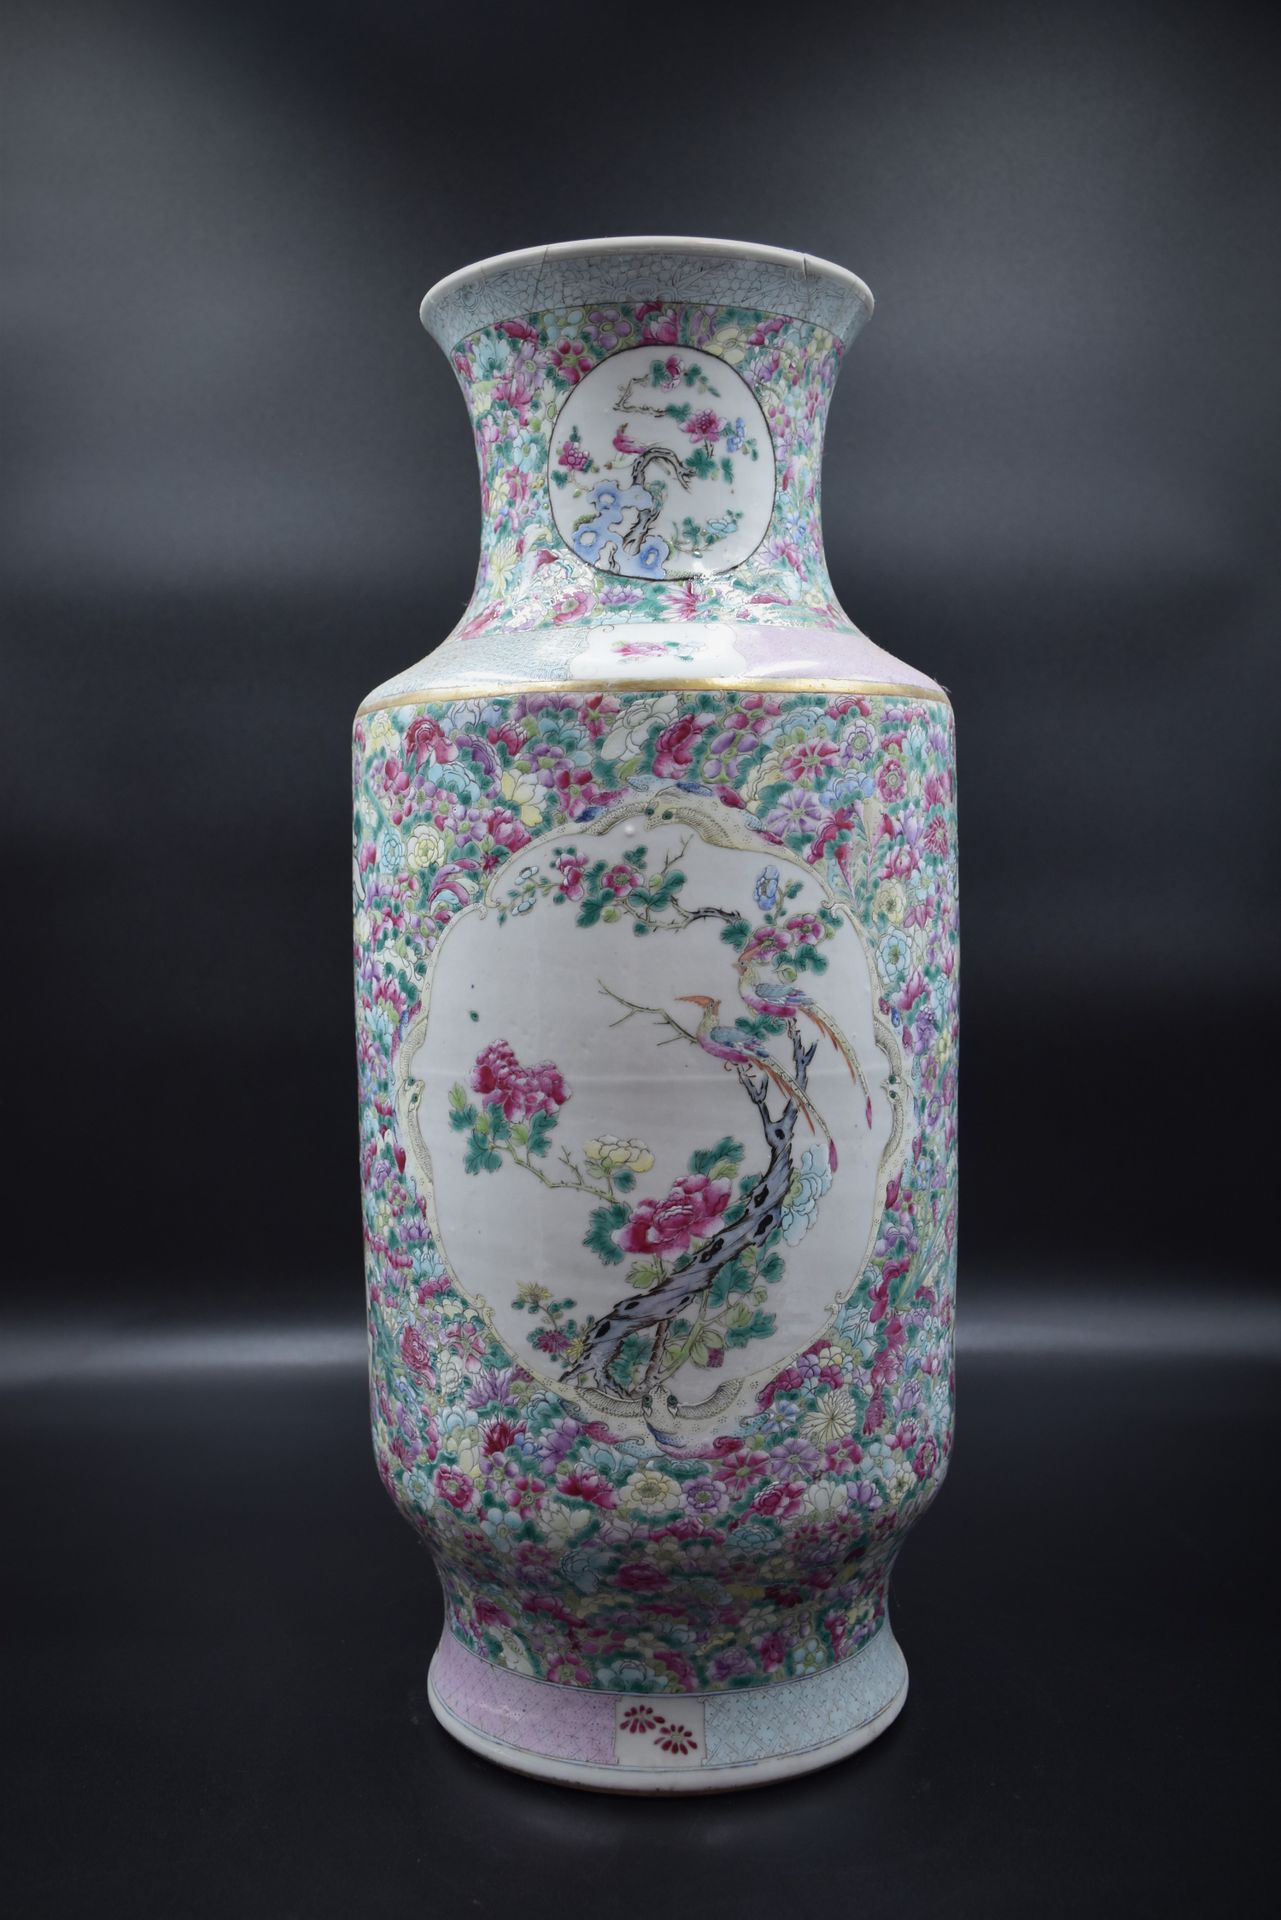 Null 中国瓷器花瓶，背景是Mille-fleurs的备用植物装饰。19世纪。已损坏。 高度：47厘米。